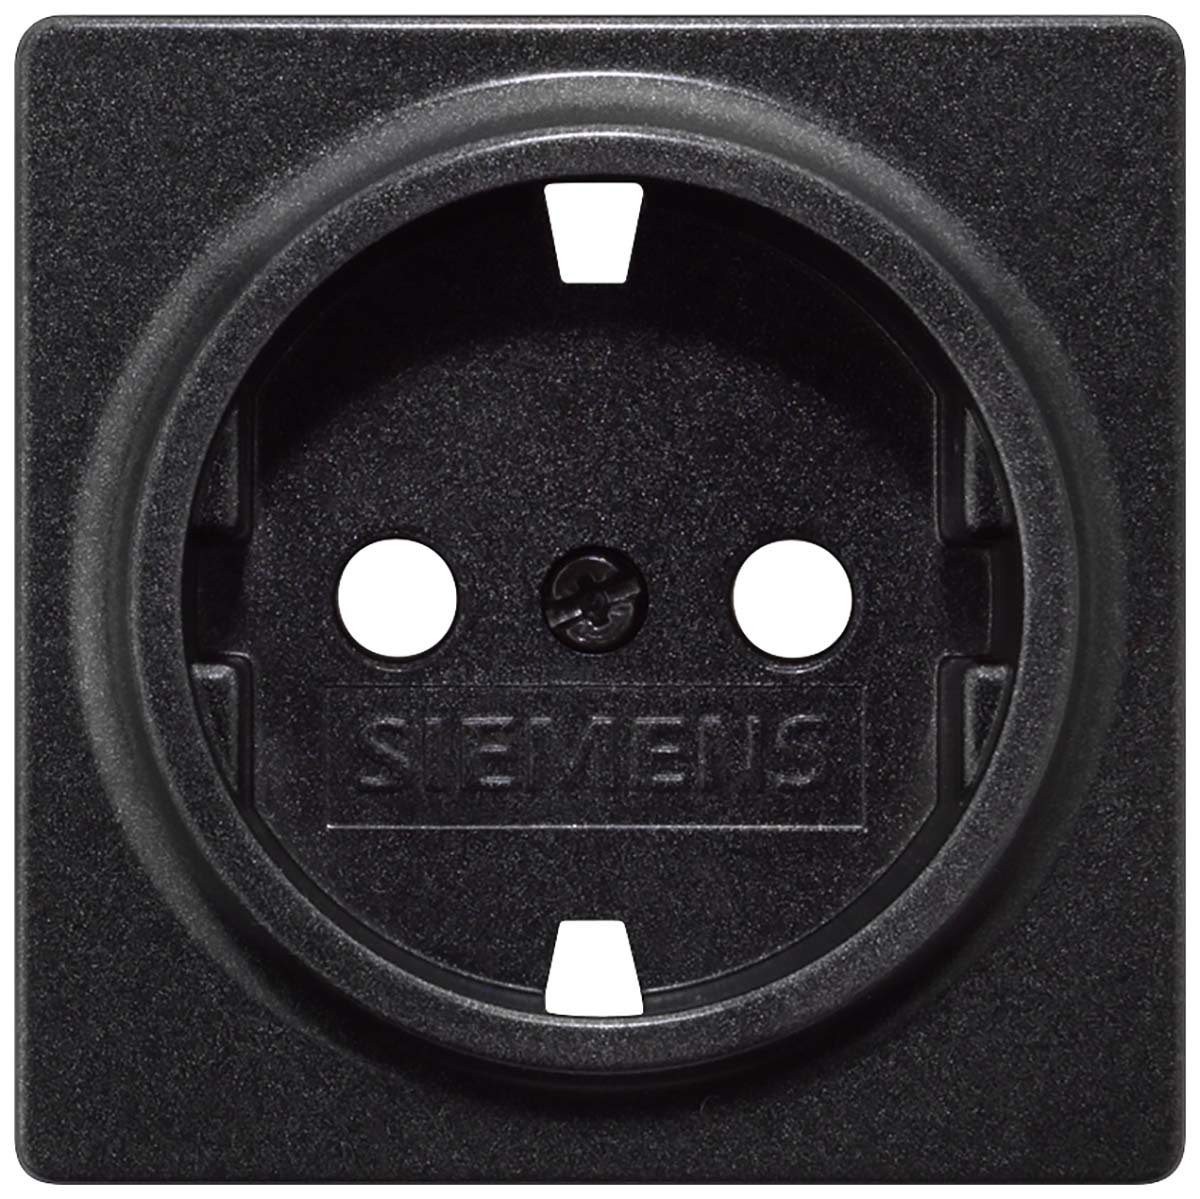 Siemens Thermoplastic Schuko Socket Cover Plate